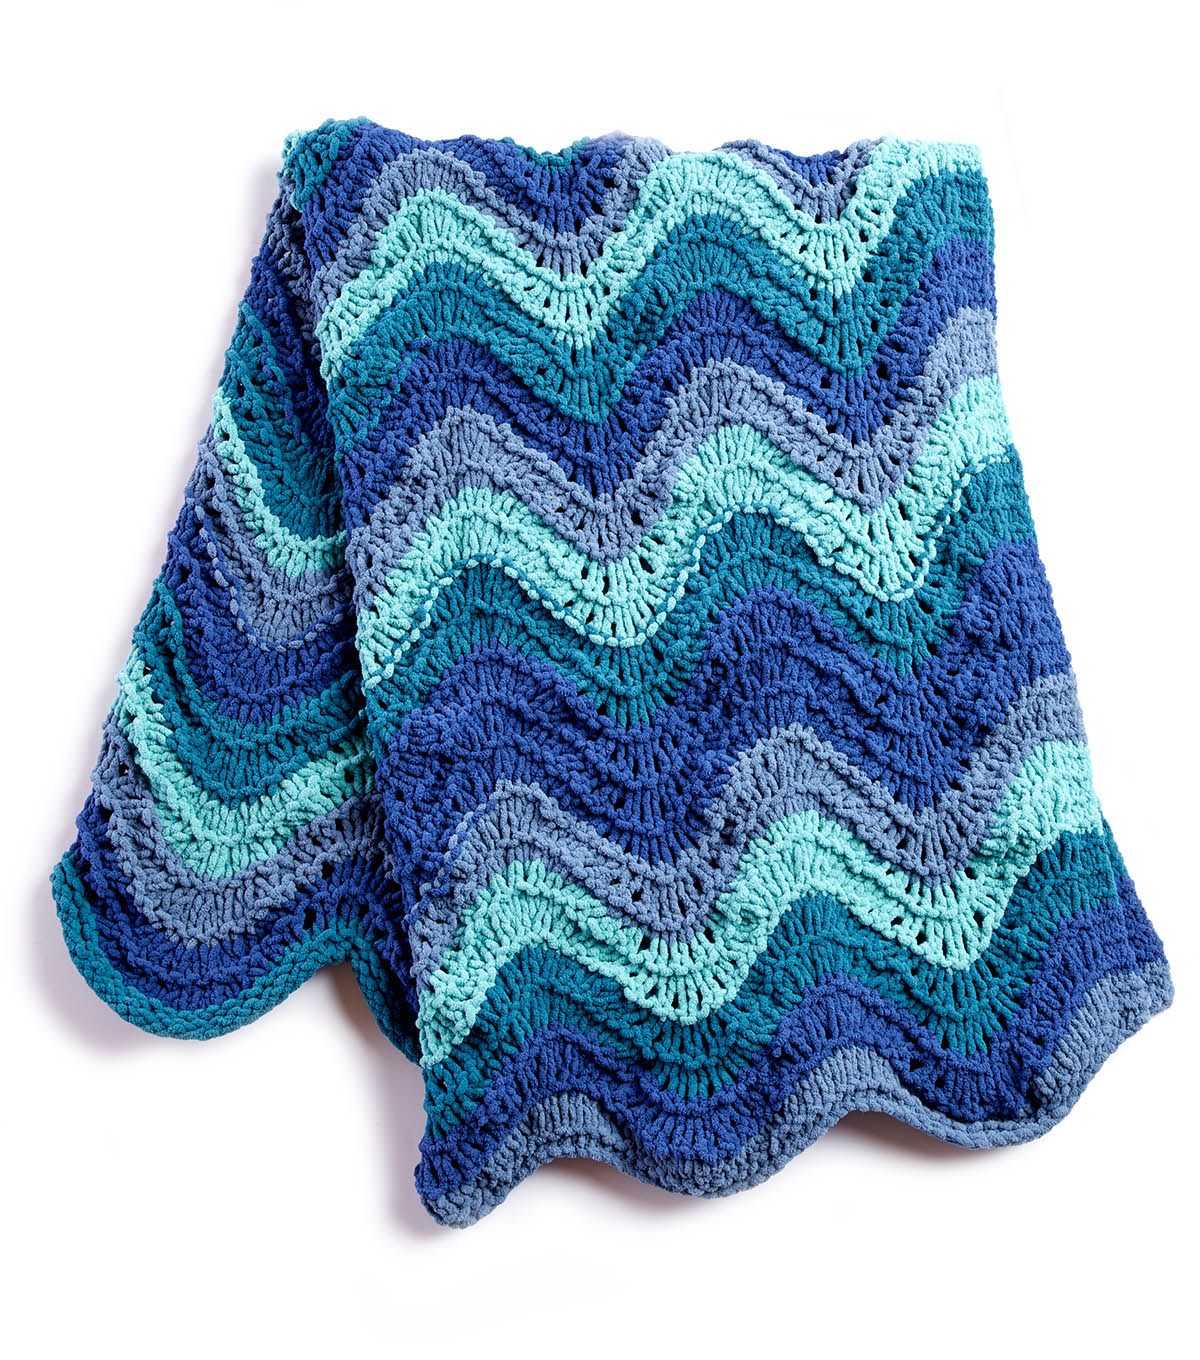 How To Make A Ripple Stripes Knit Blanket | JOANN